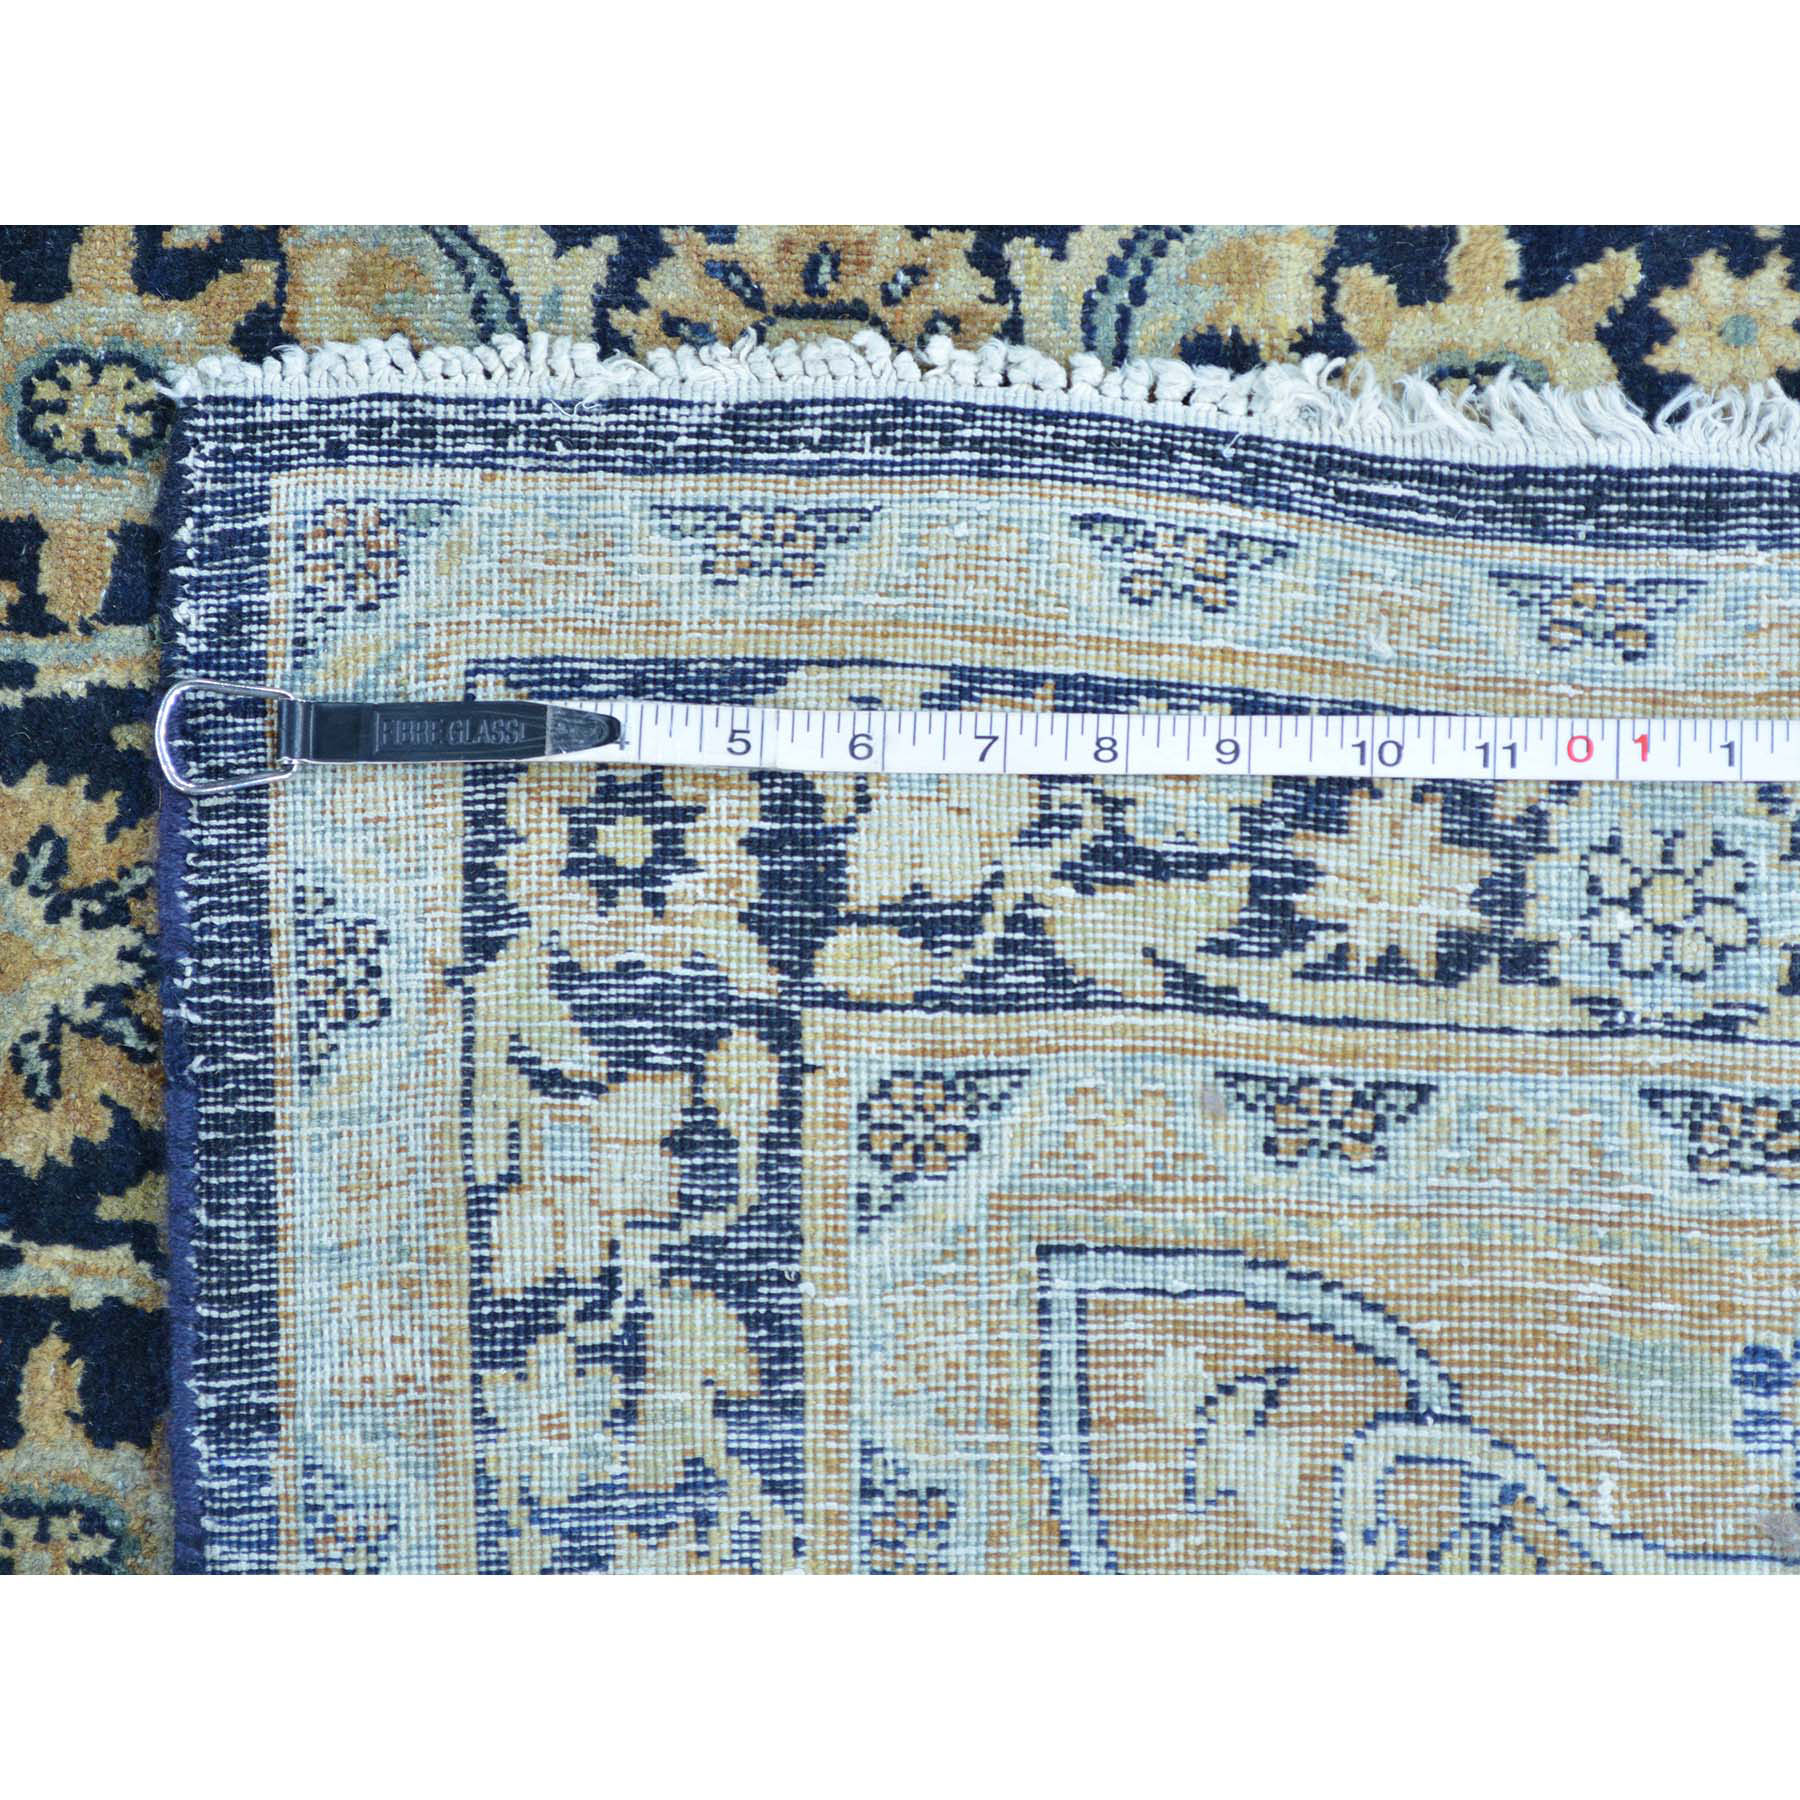 10-10 x17- Gallery Size Antique Persian Kerman Herati Design Rug 